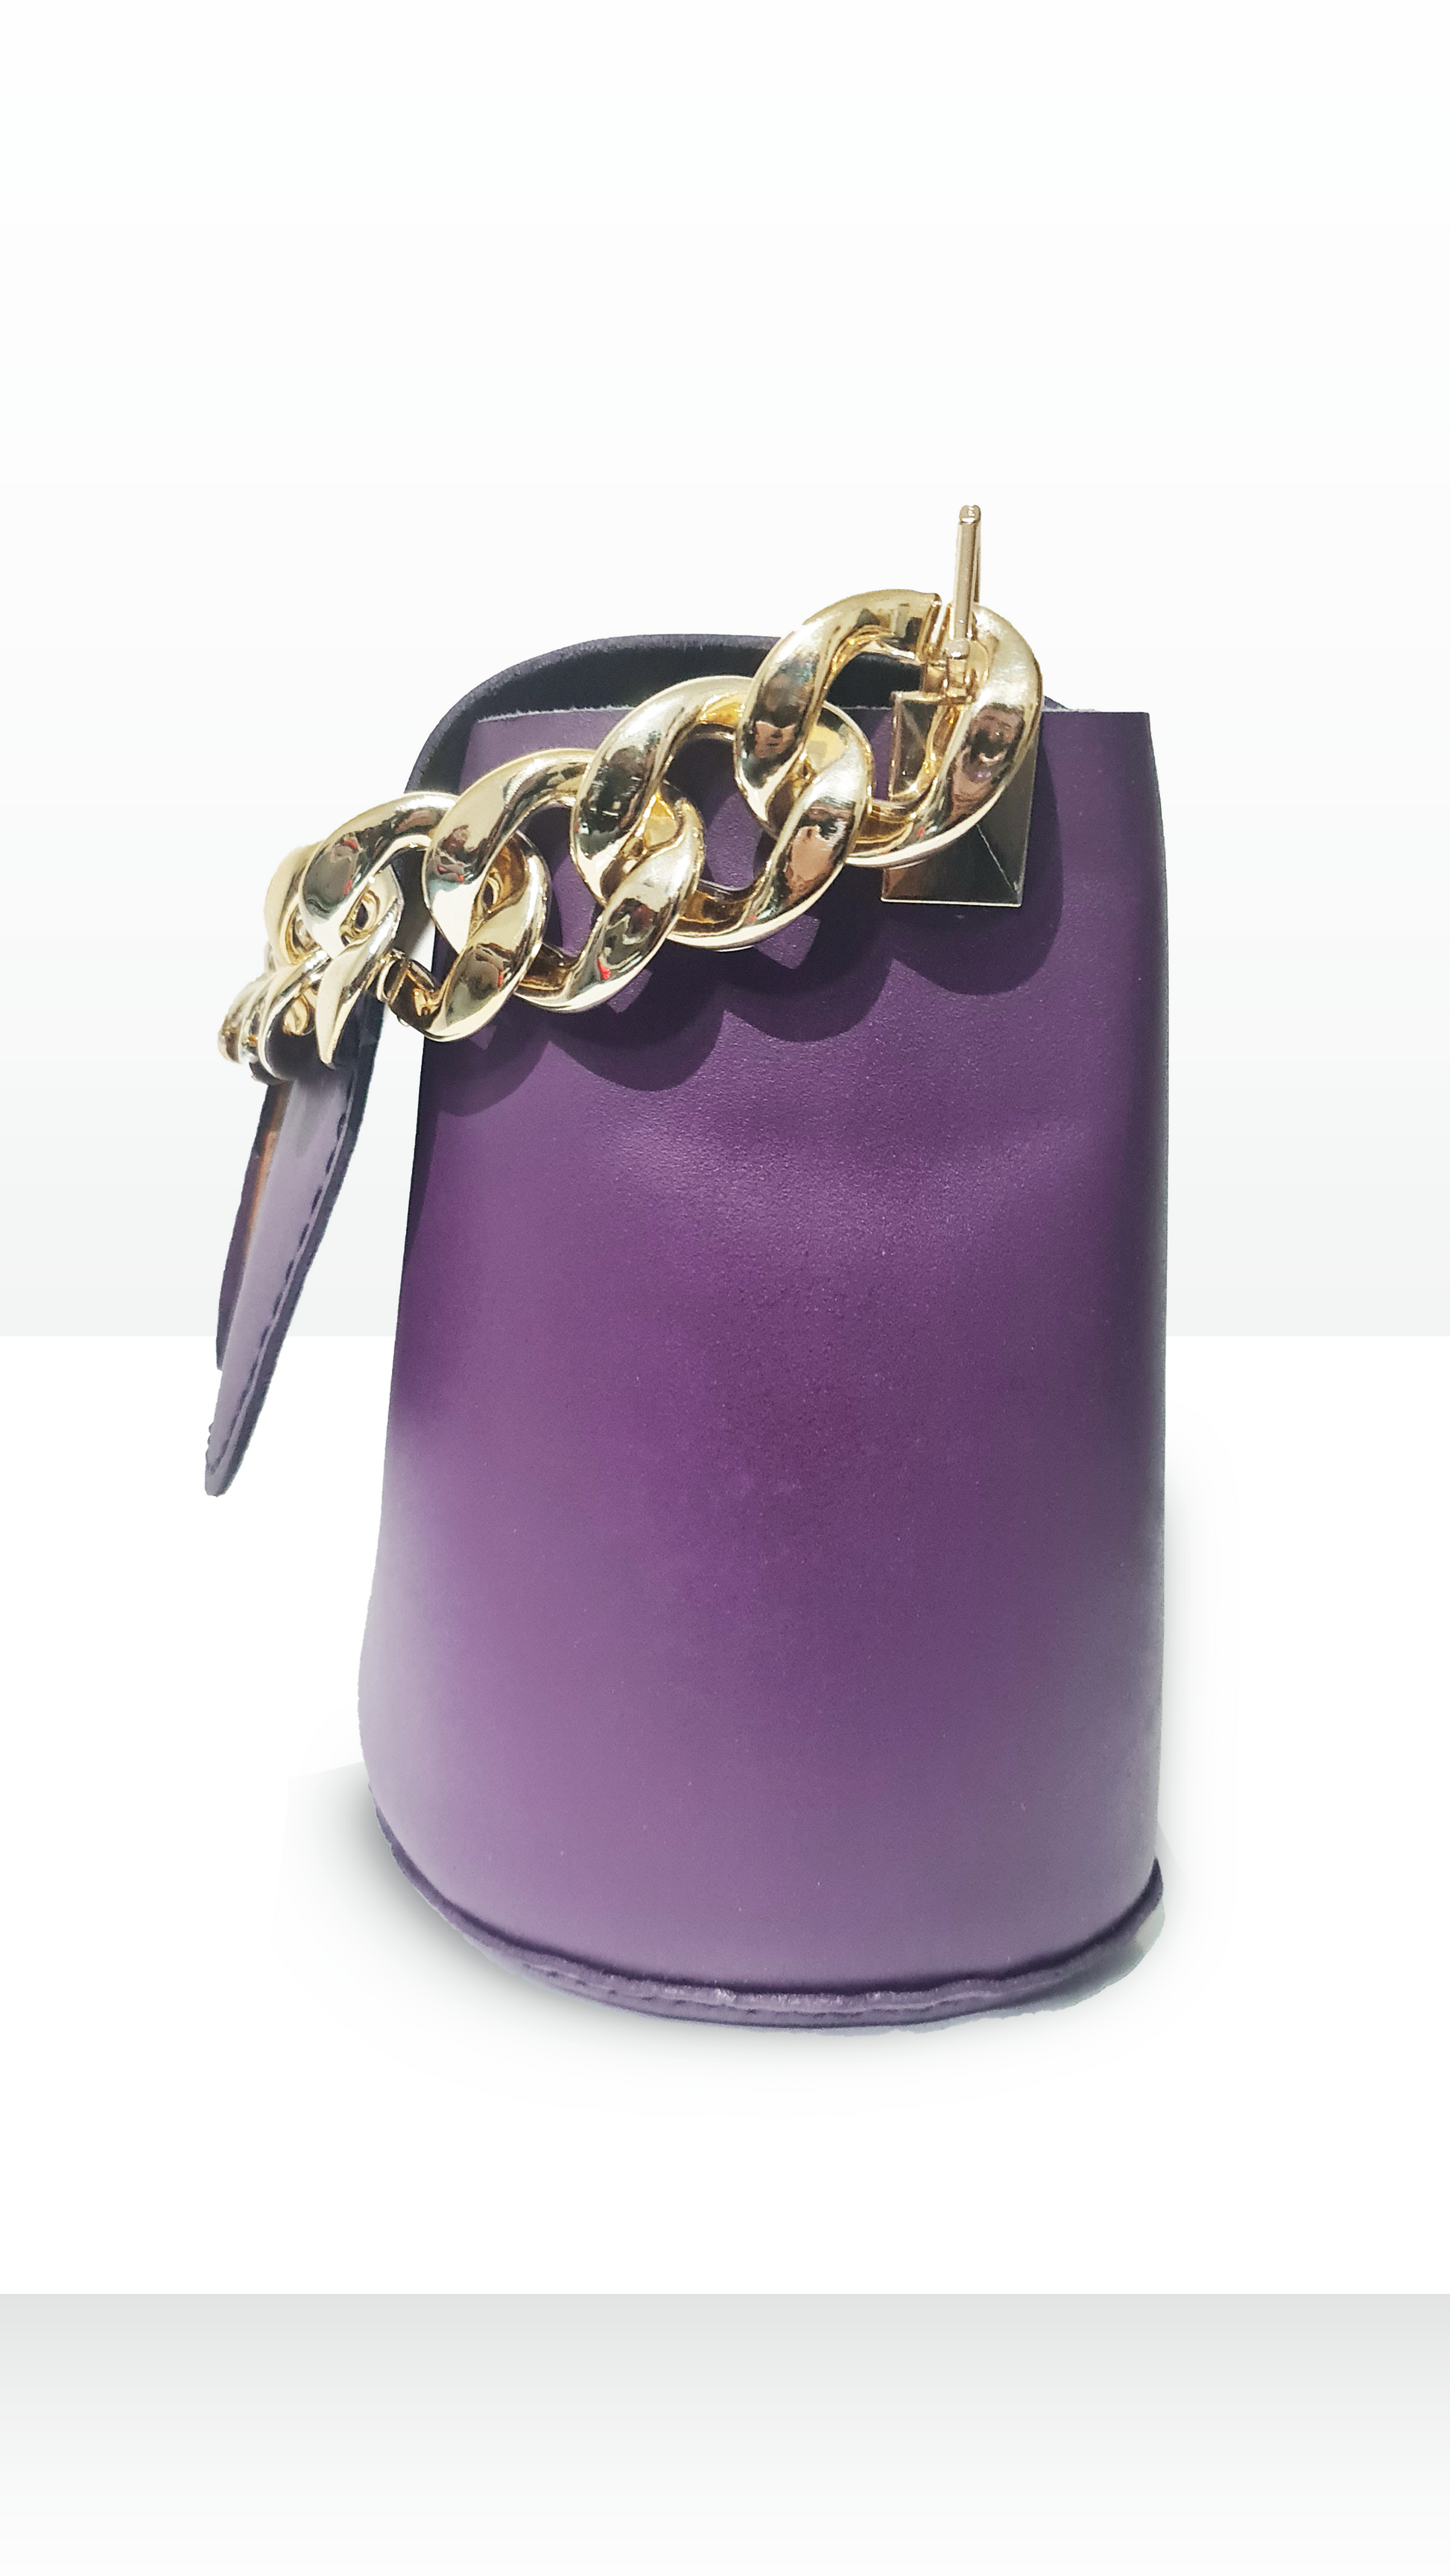 Trendy purple bag with a gold chain handle & long strap – Rado Fashion Store